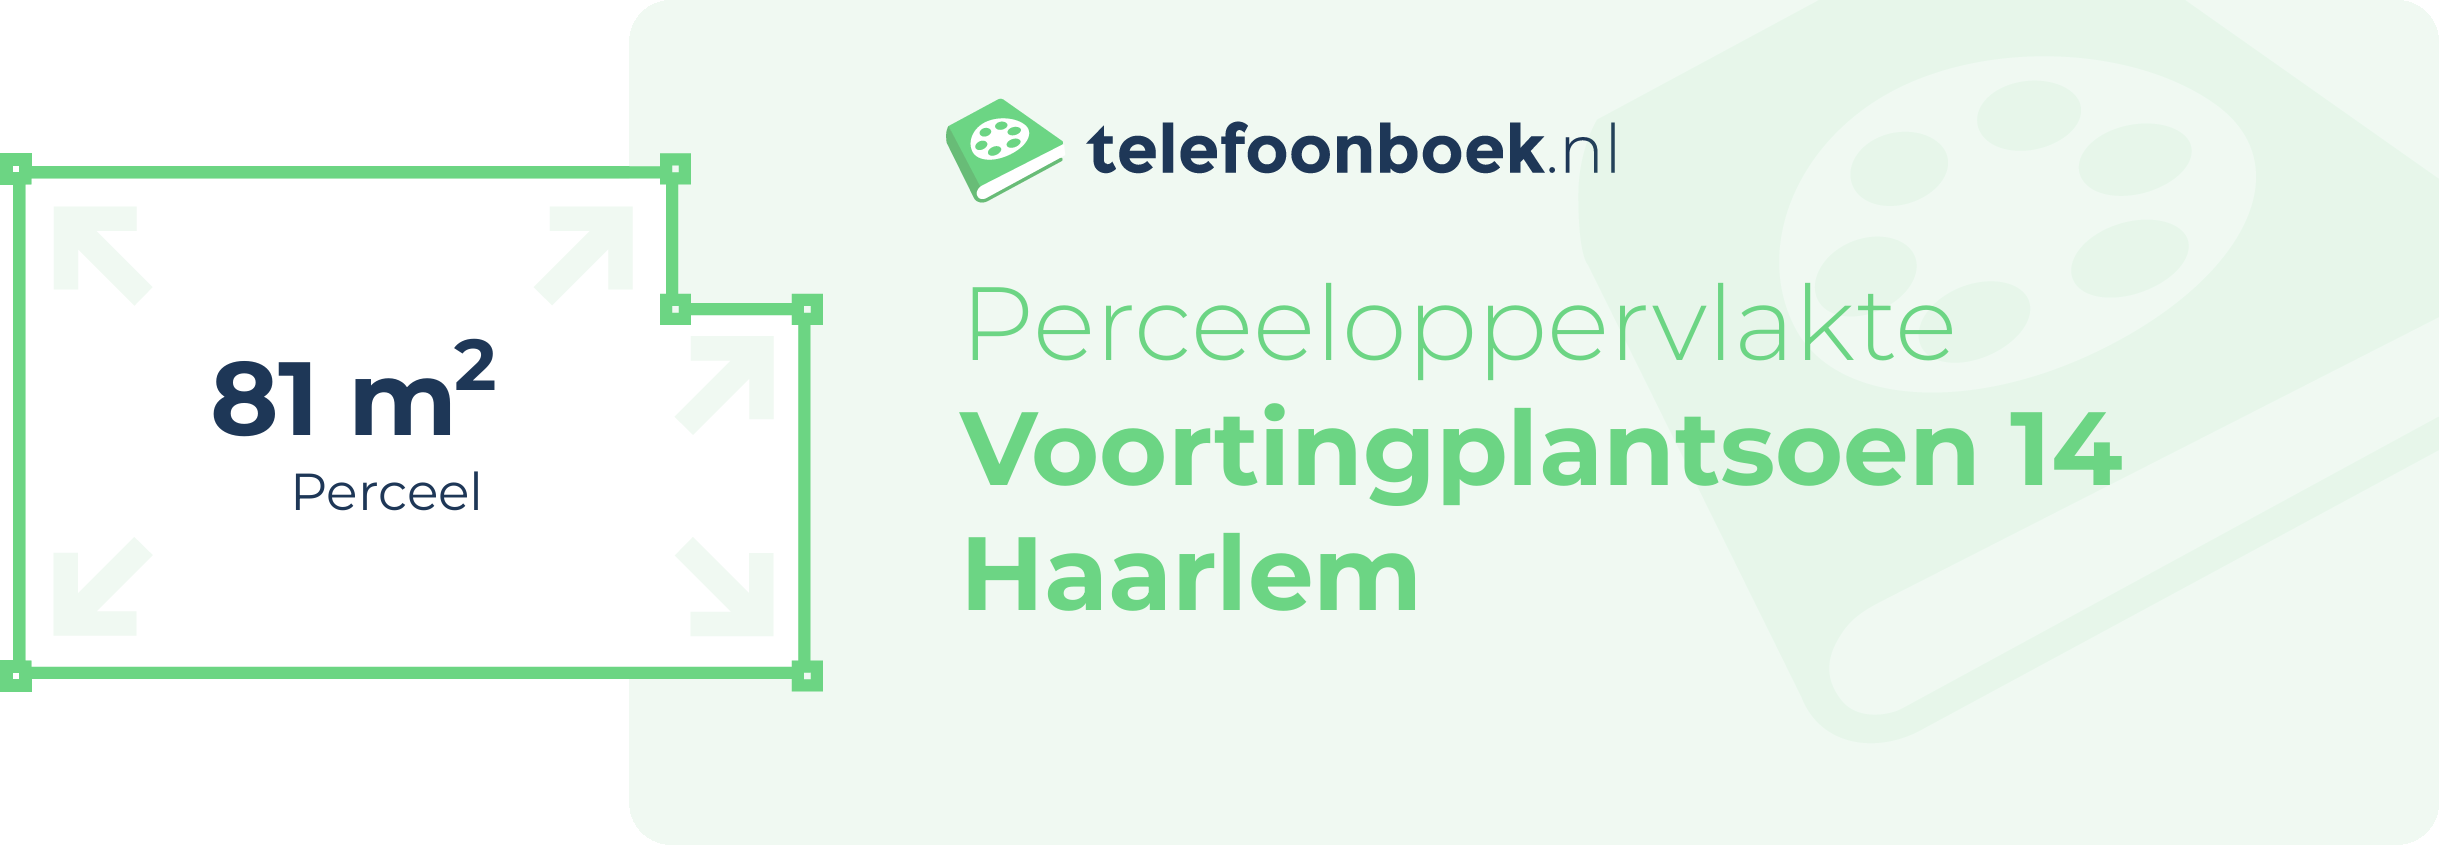 Perceeloppervlakte Voortingplantsoen 14 Haarlem